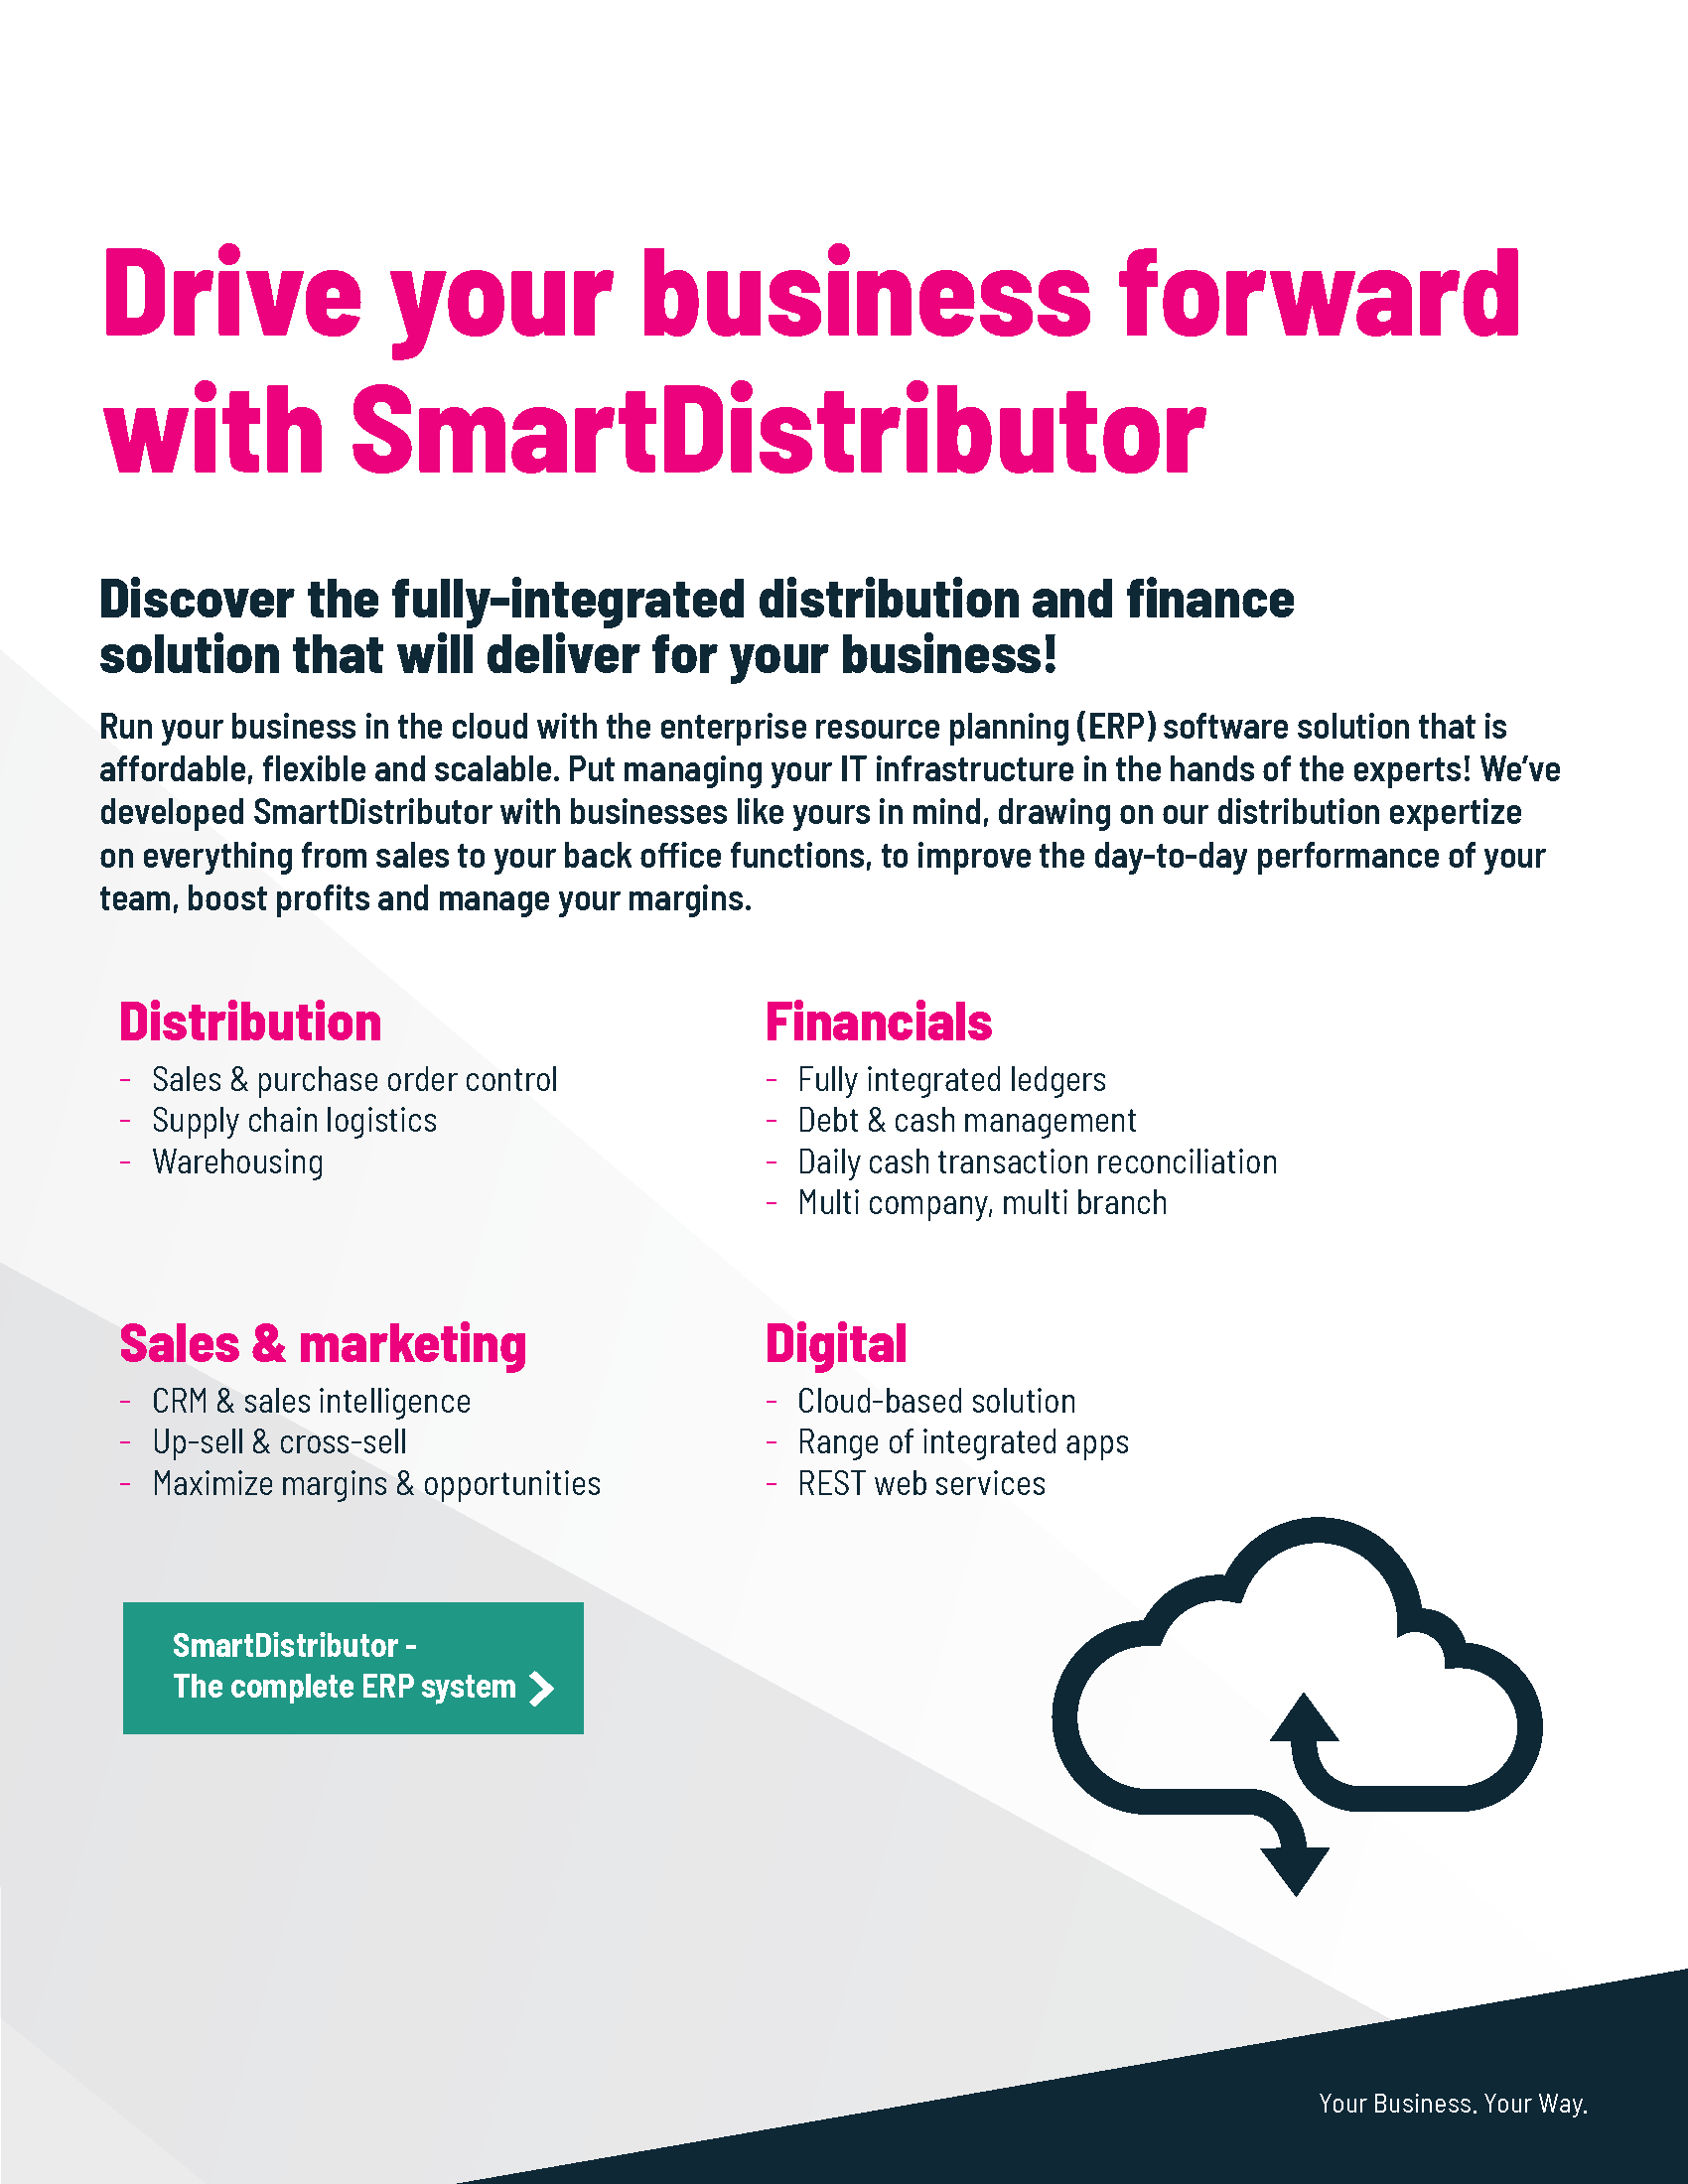 Drive your distribution business forward with SmartDistributor